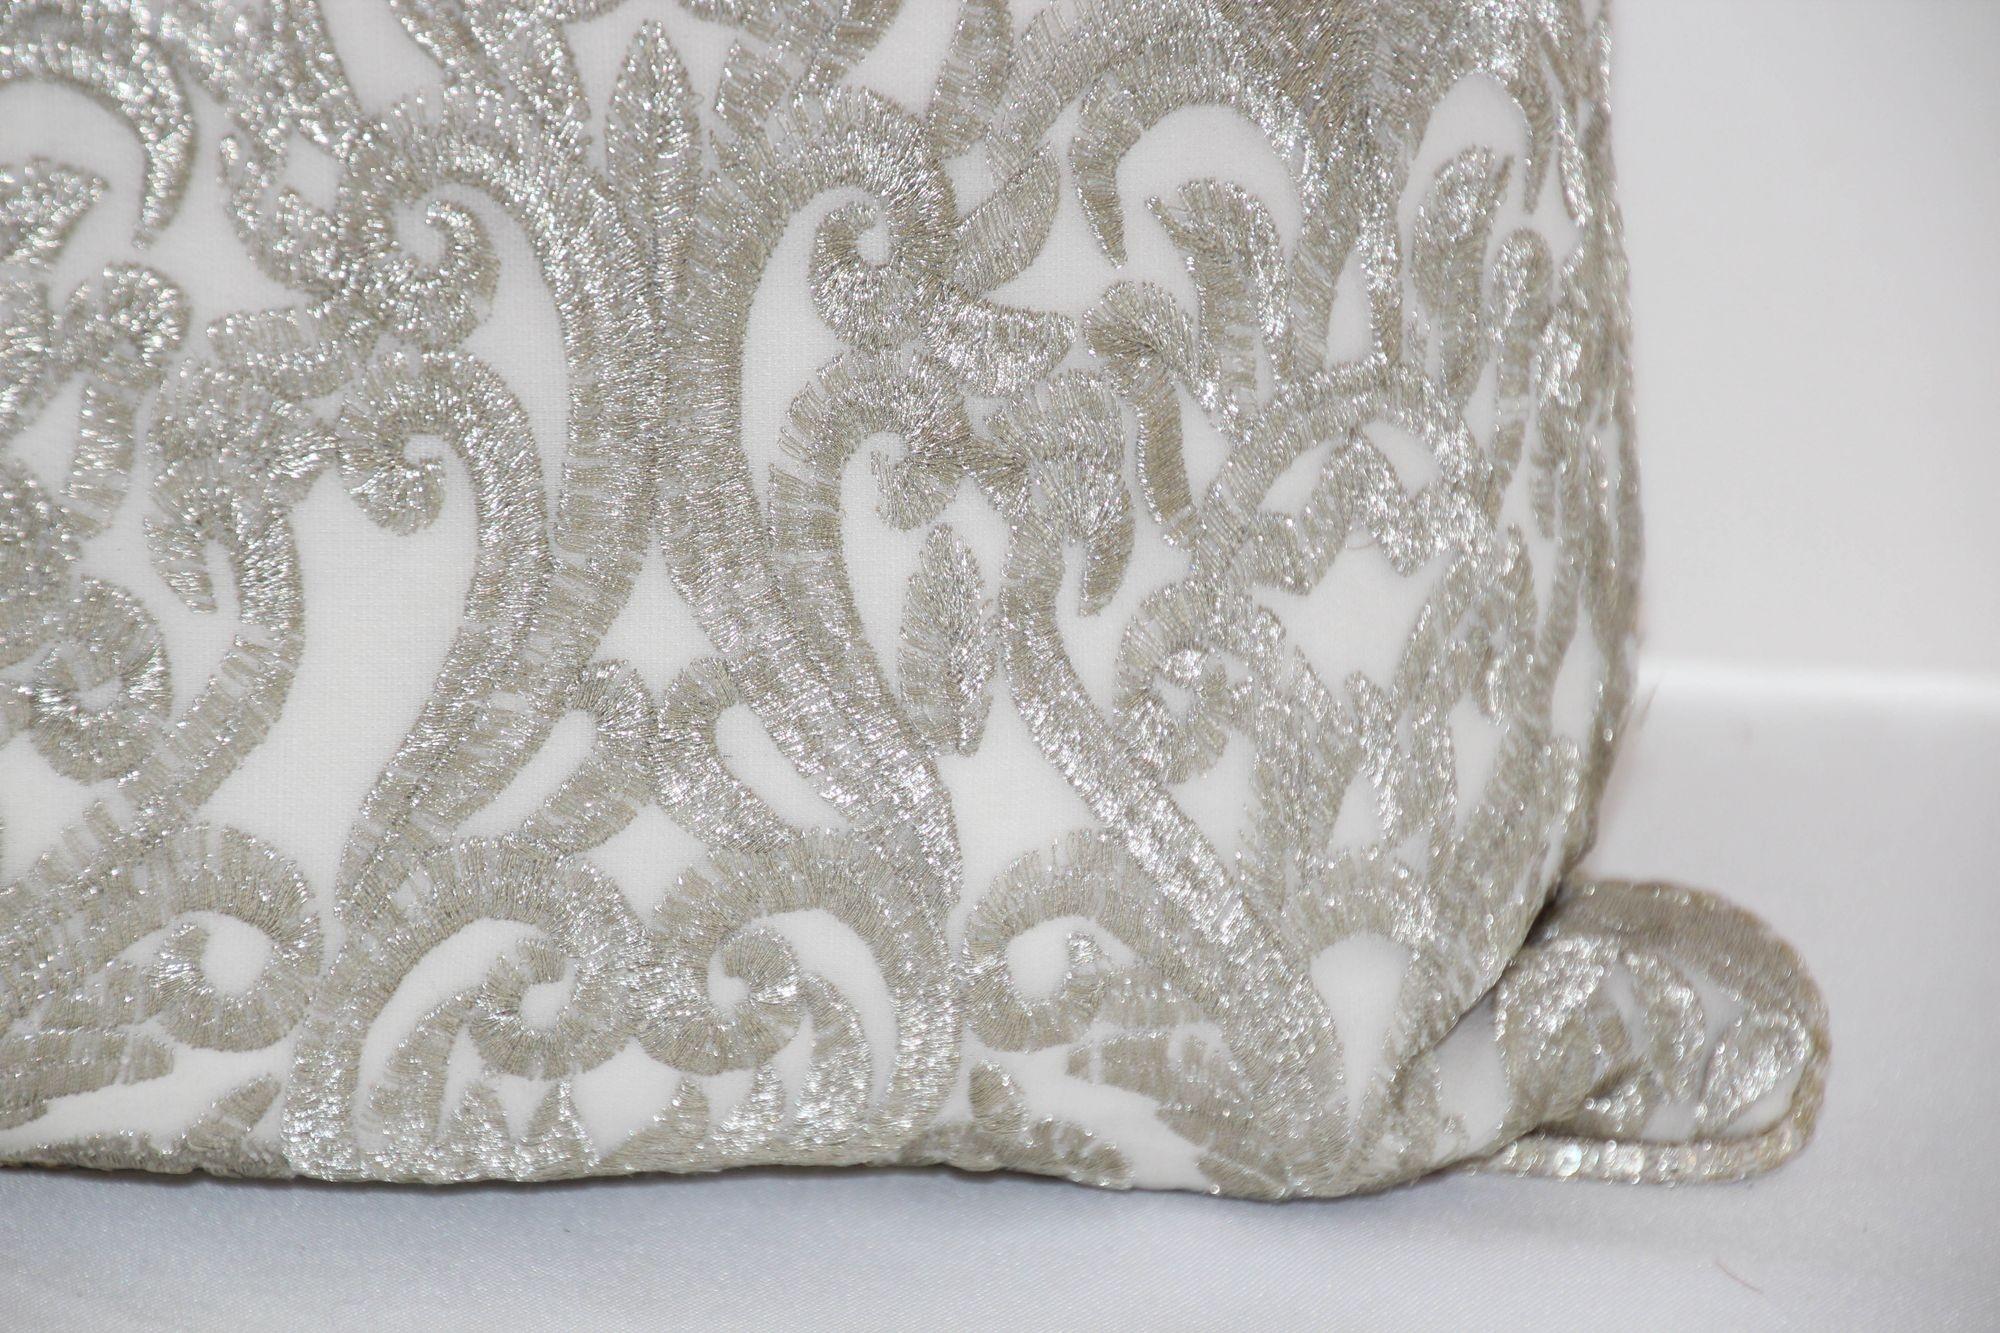 20th Century Turkish Moorish Ottoman Style Throw Pillow with Silver Metallic Embroidery For Sale